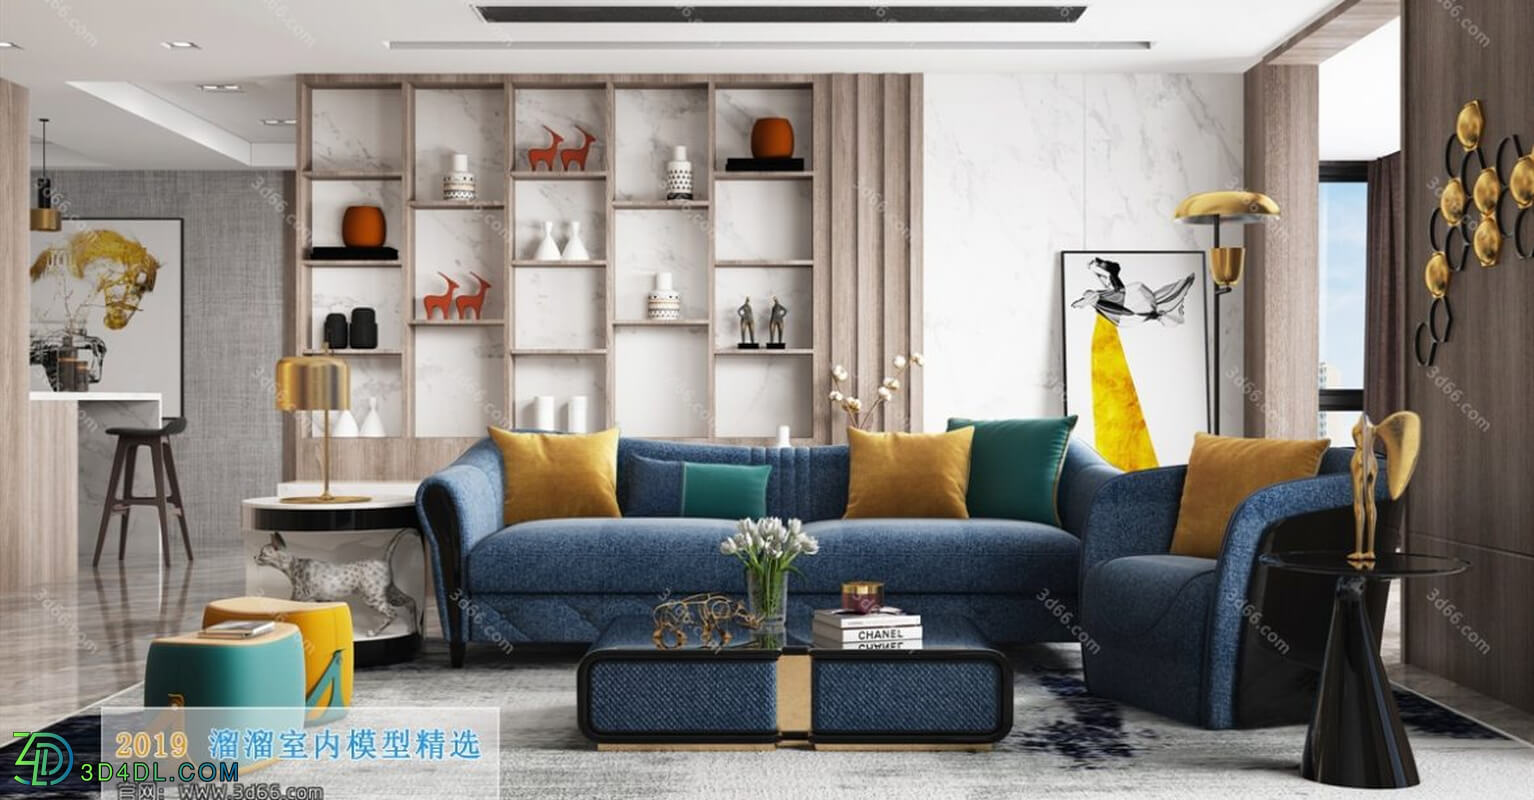 3D66 2019 Living Room (001)